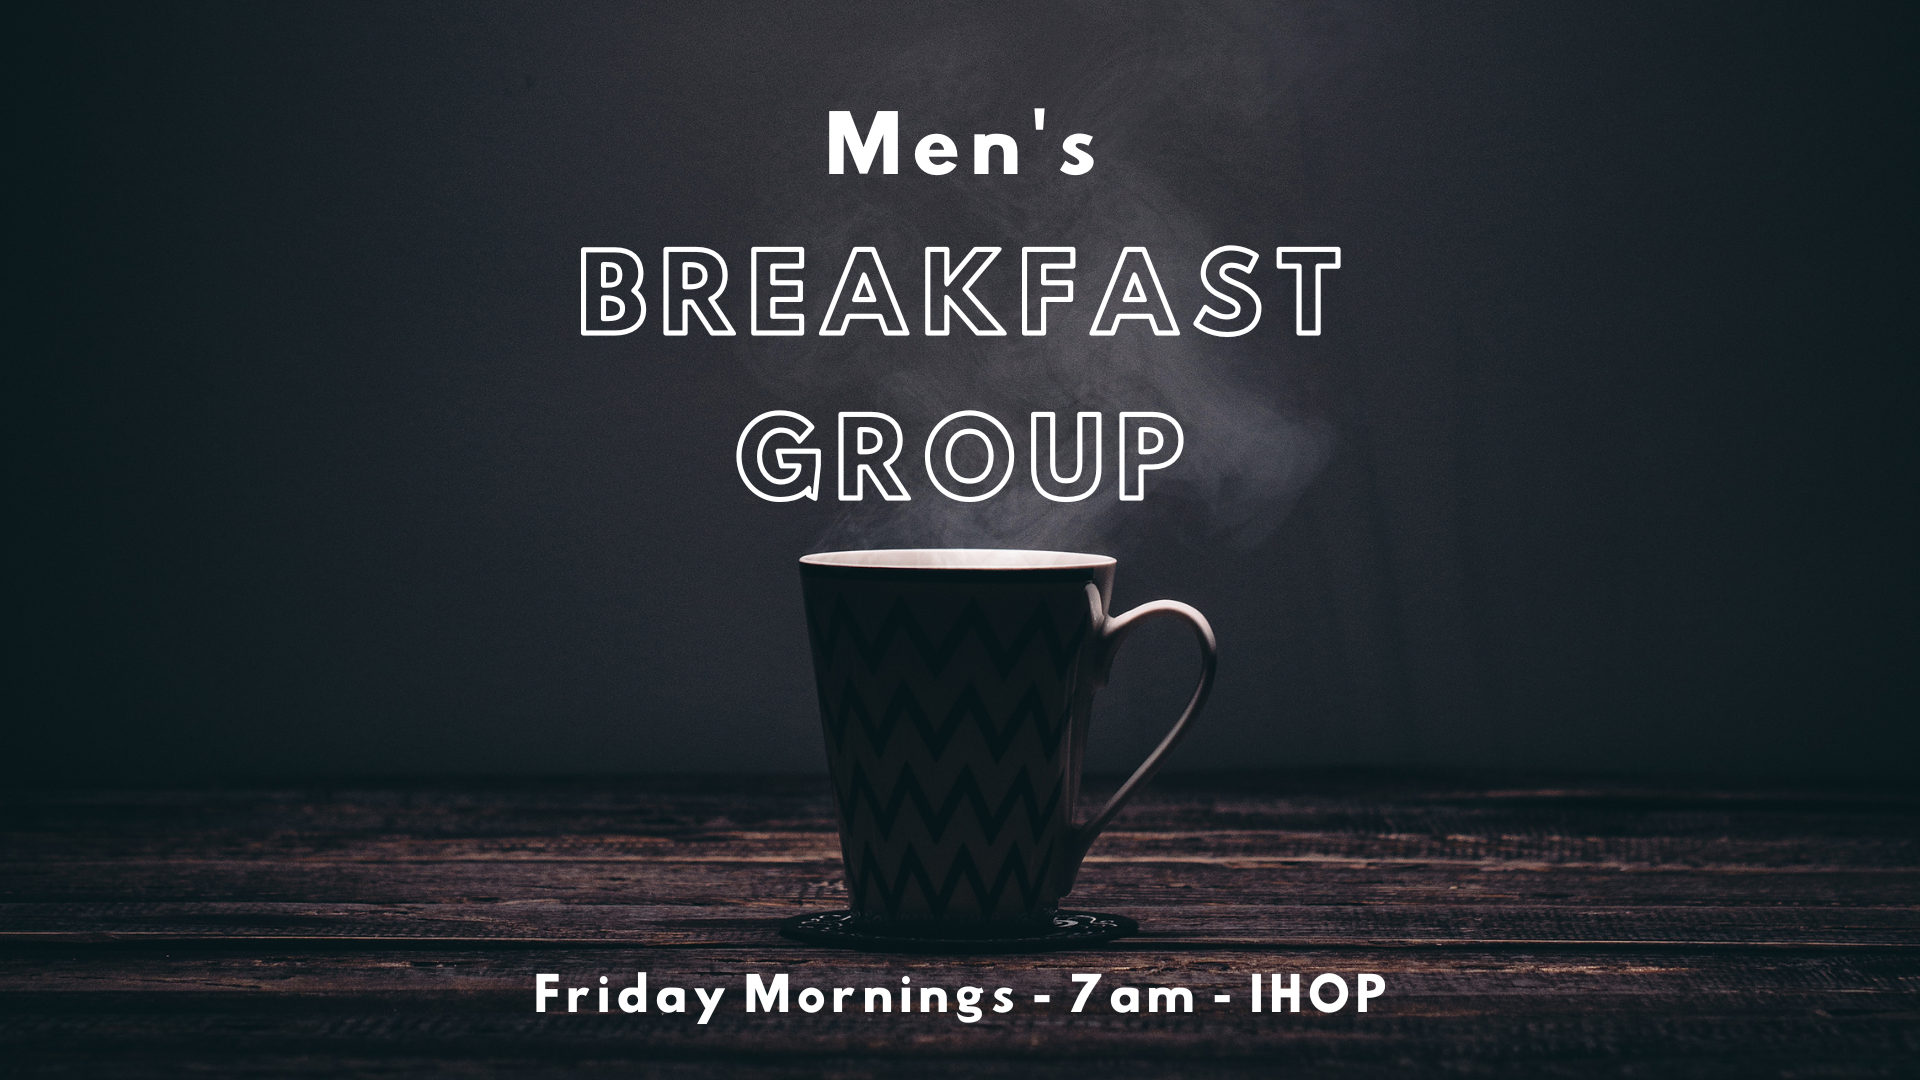 Men's Breakfast Group (1920 × 1080 px) image